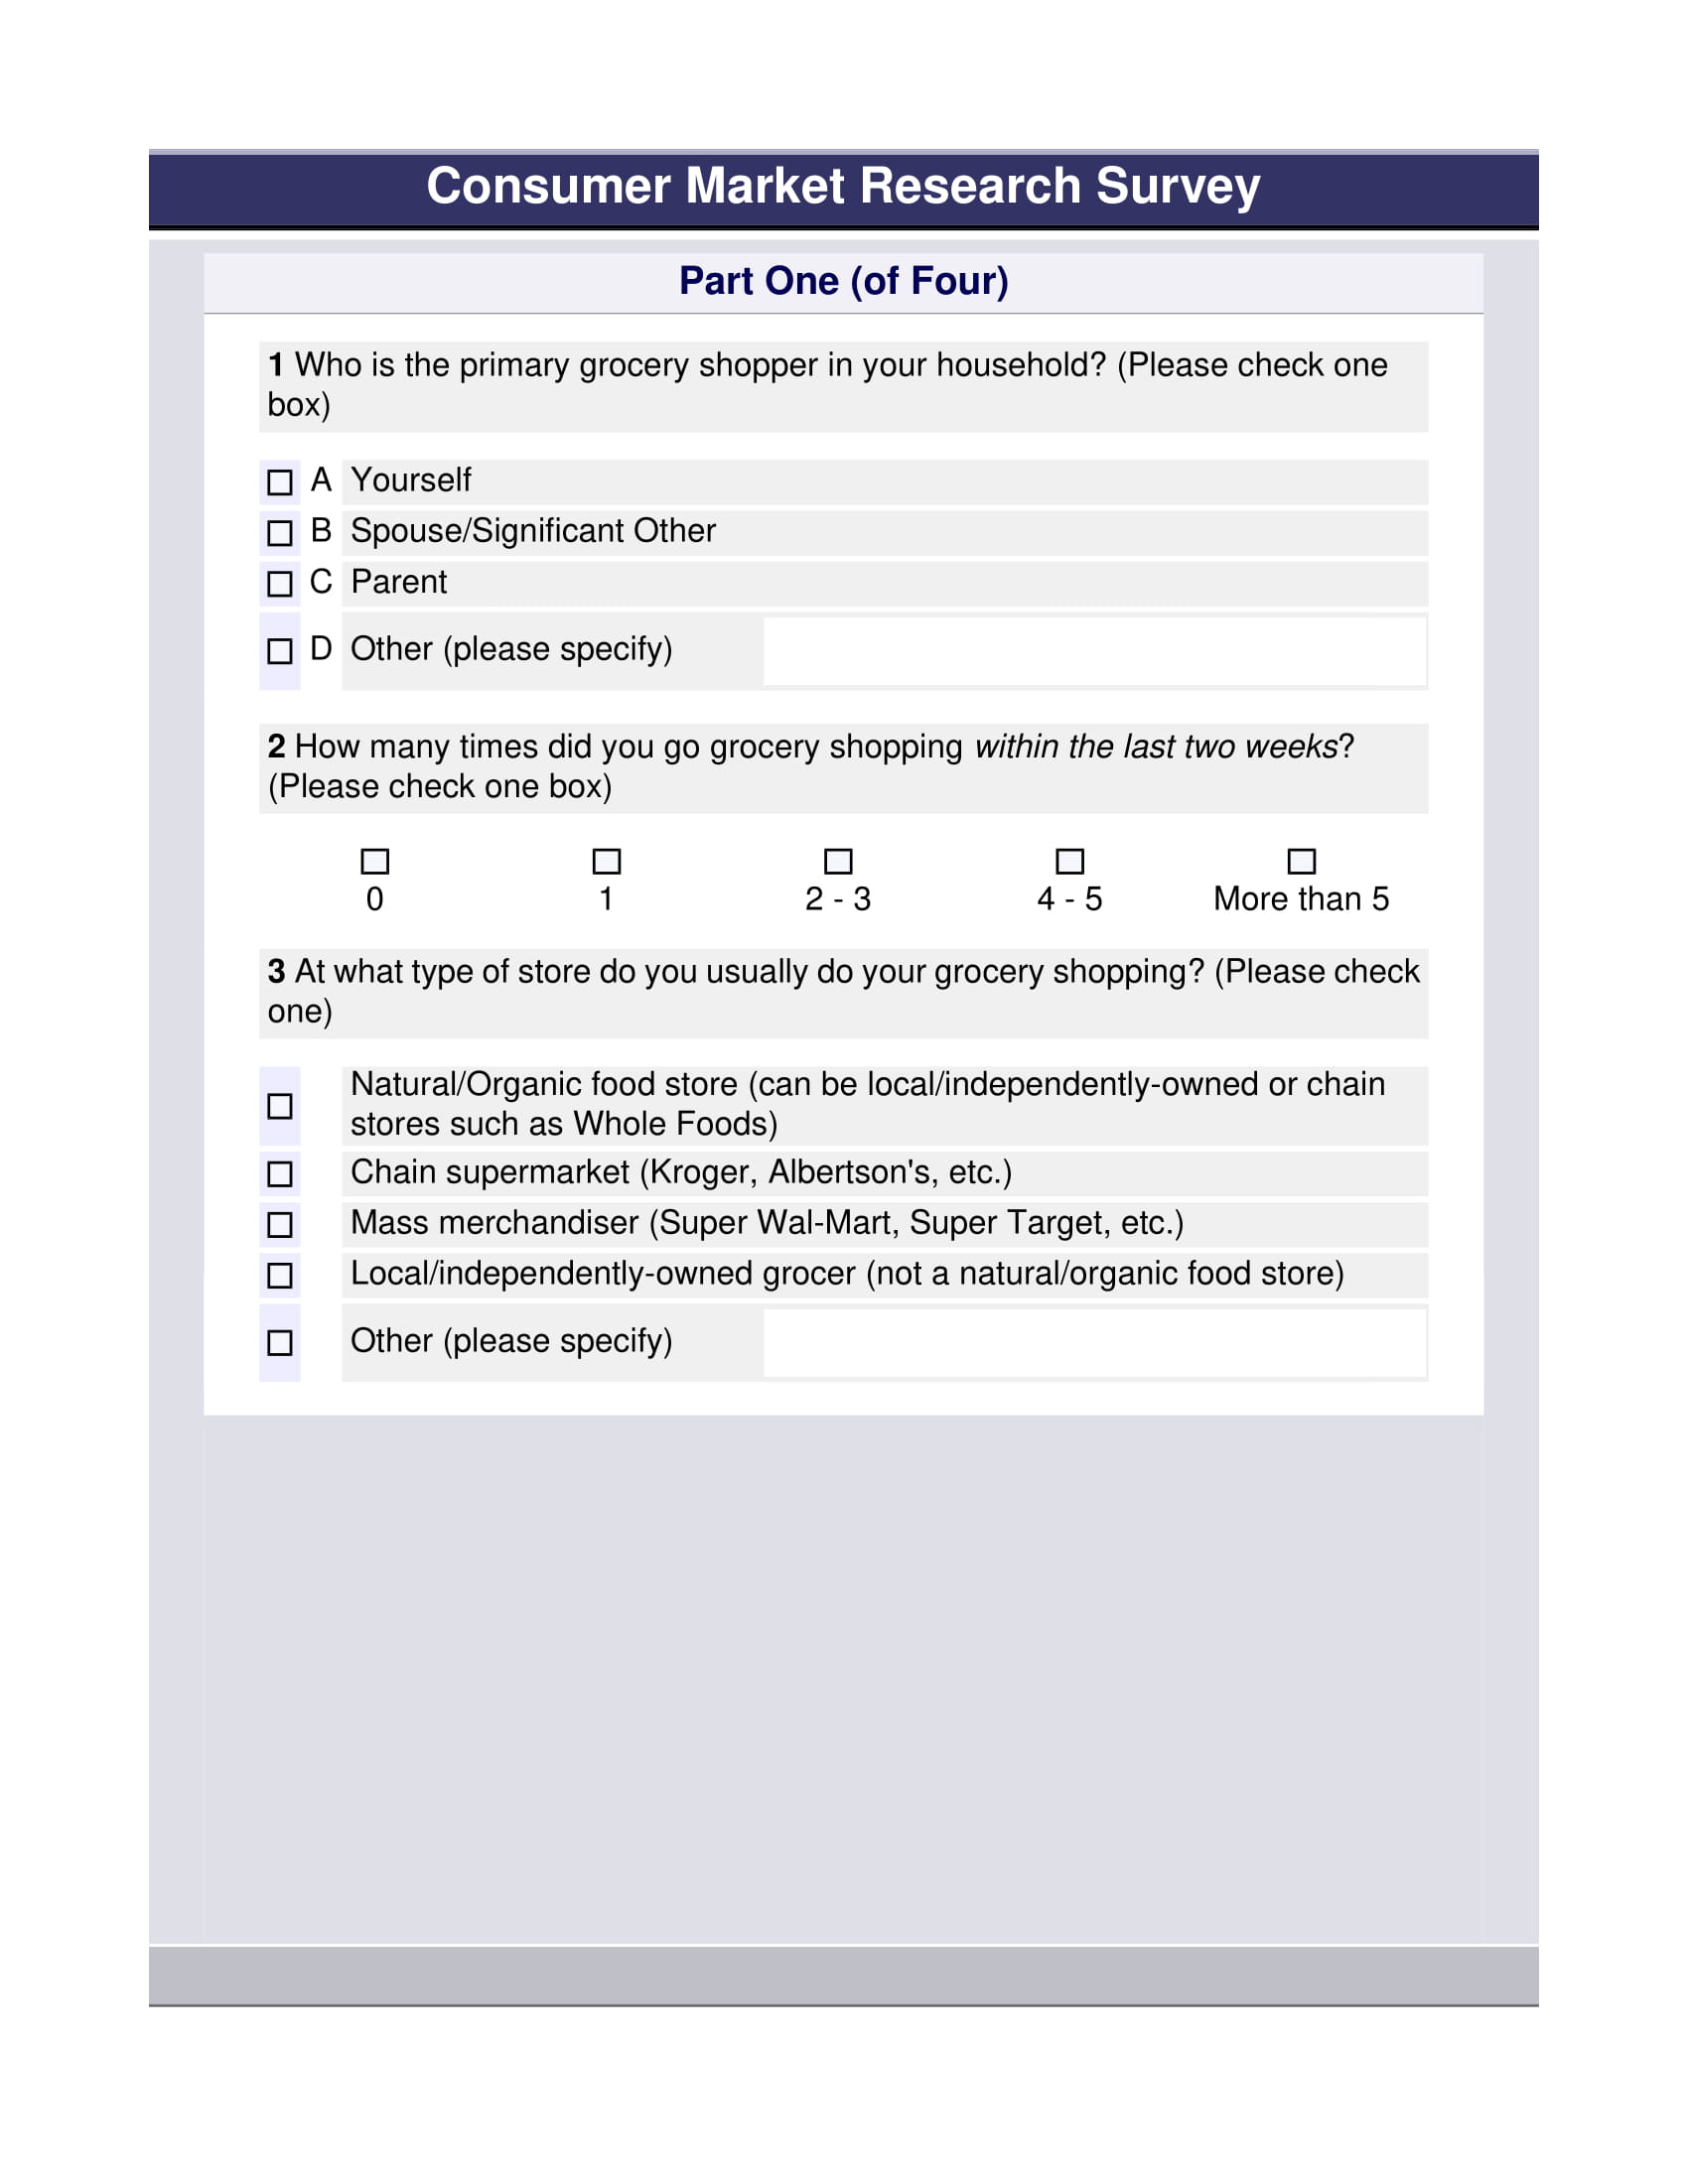 consumer market research survey form 02